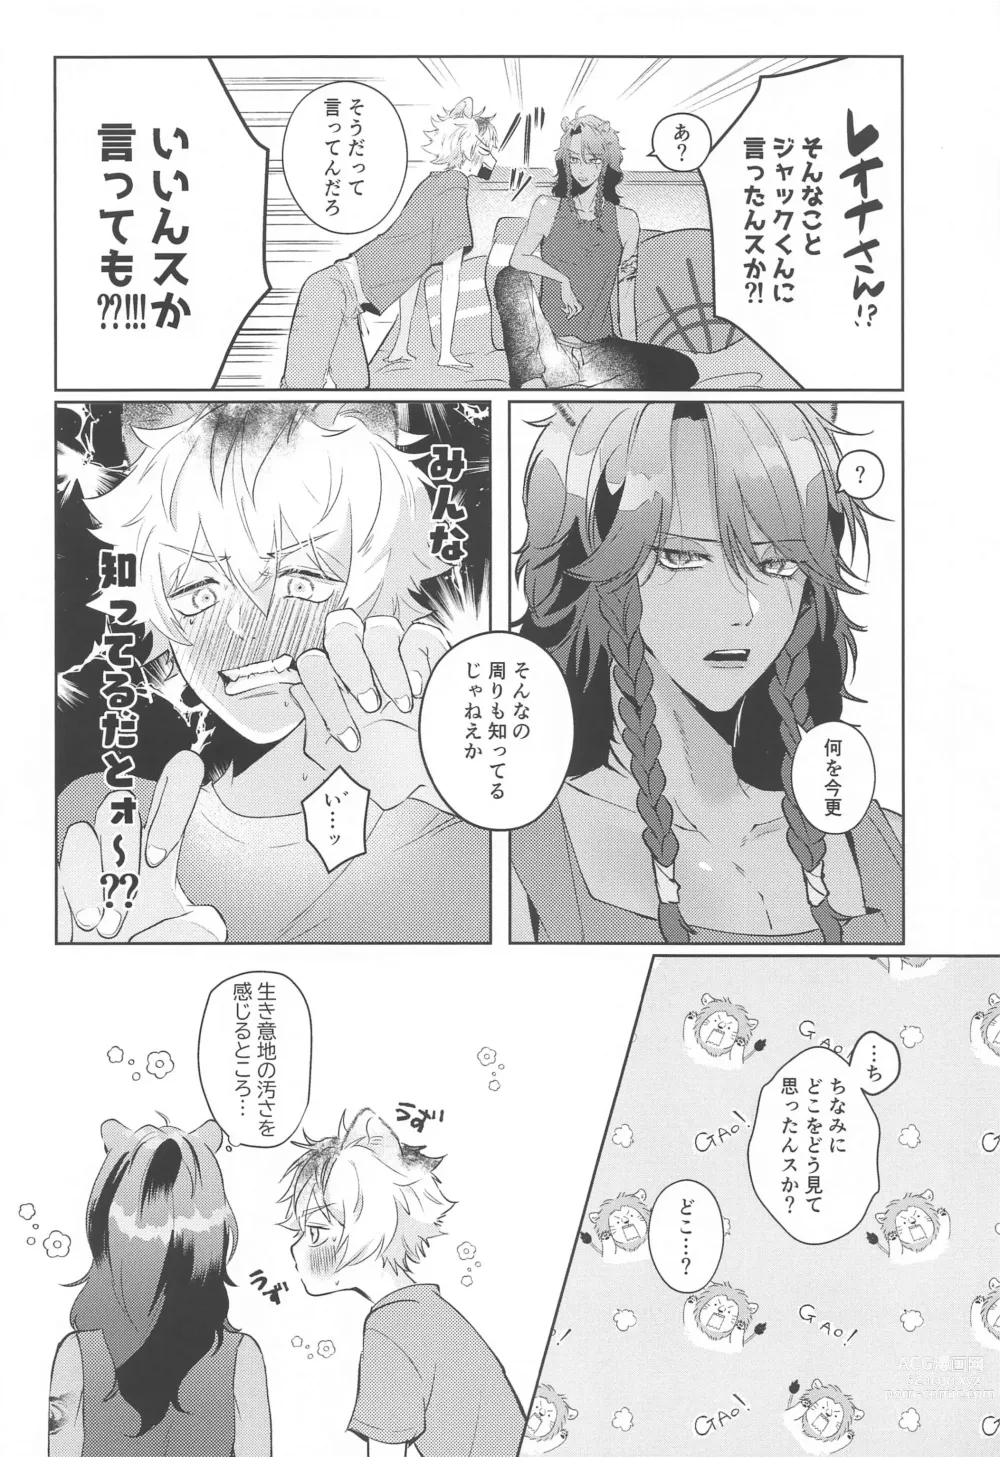 Page 7 of doujinshi Kanchigai Over Run!! - over run from a misunderstanding